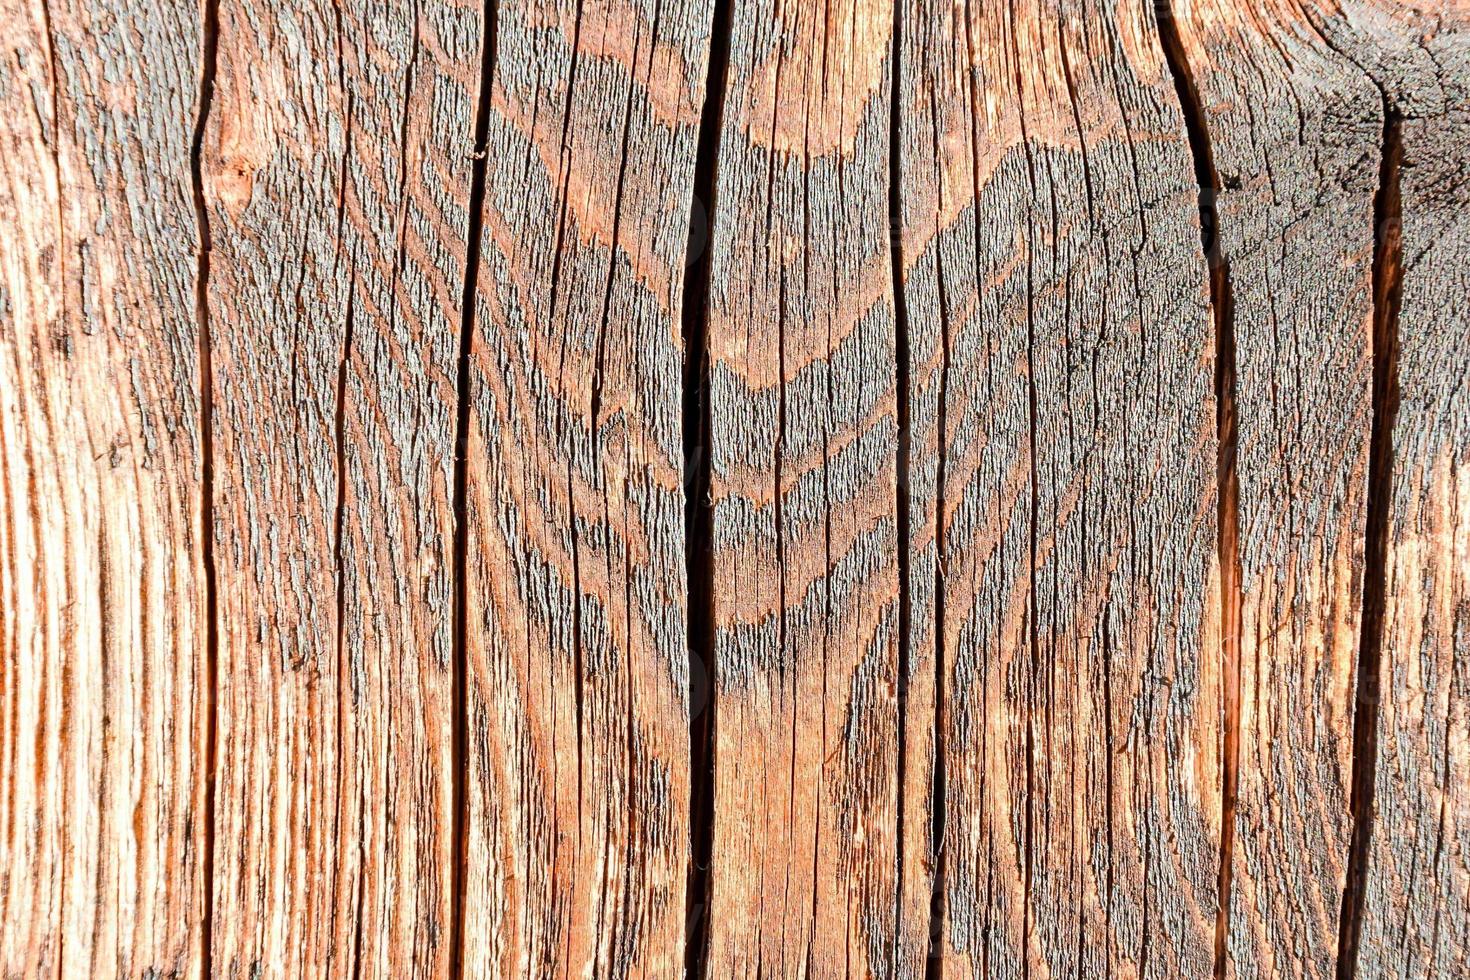 Rough wood texture photo